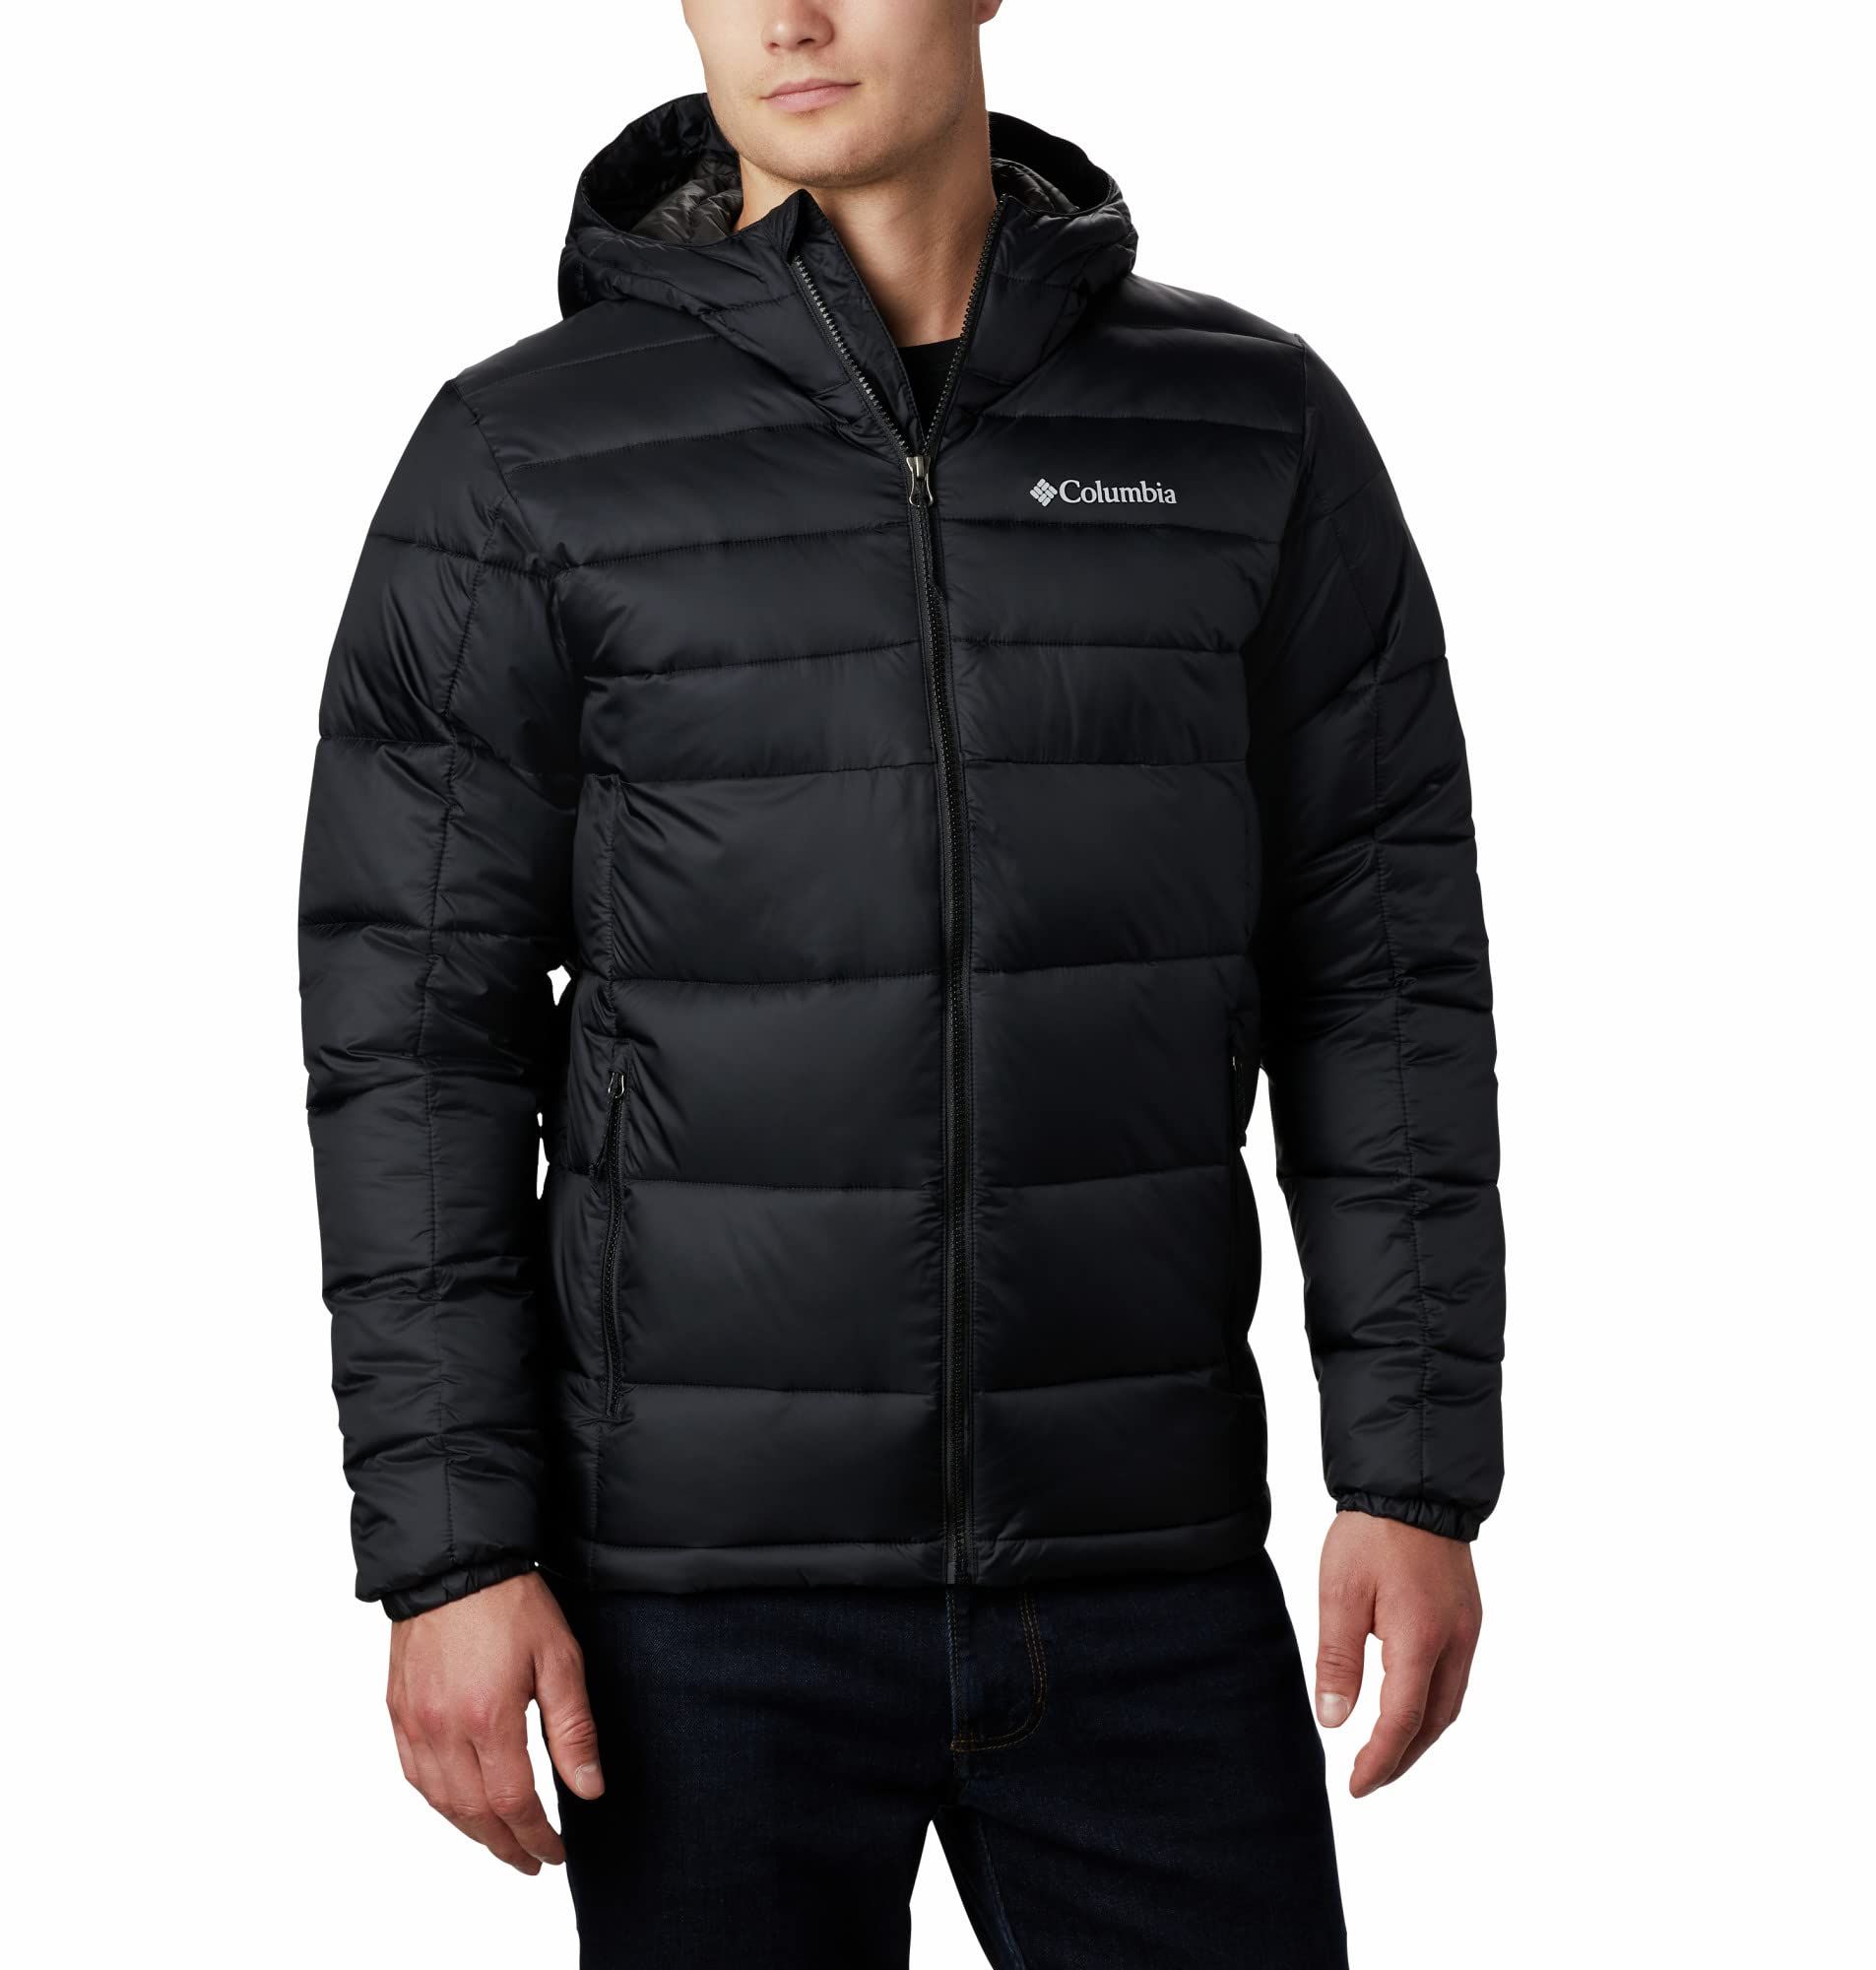 Amazon Winter Coat Black Friday Sale: Shop Puffer Jackets Starting